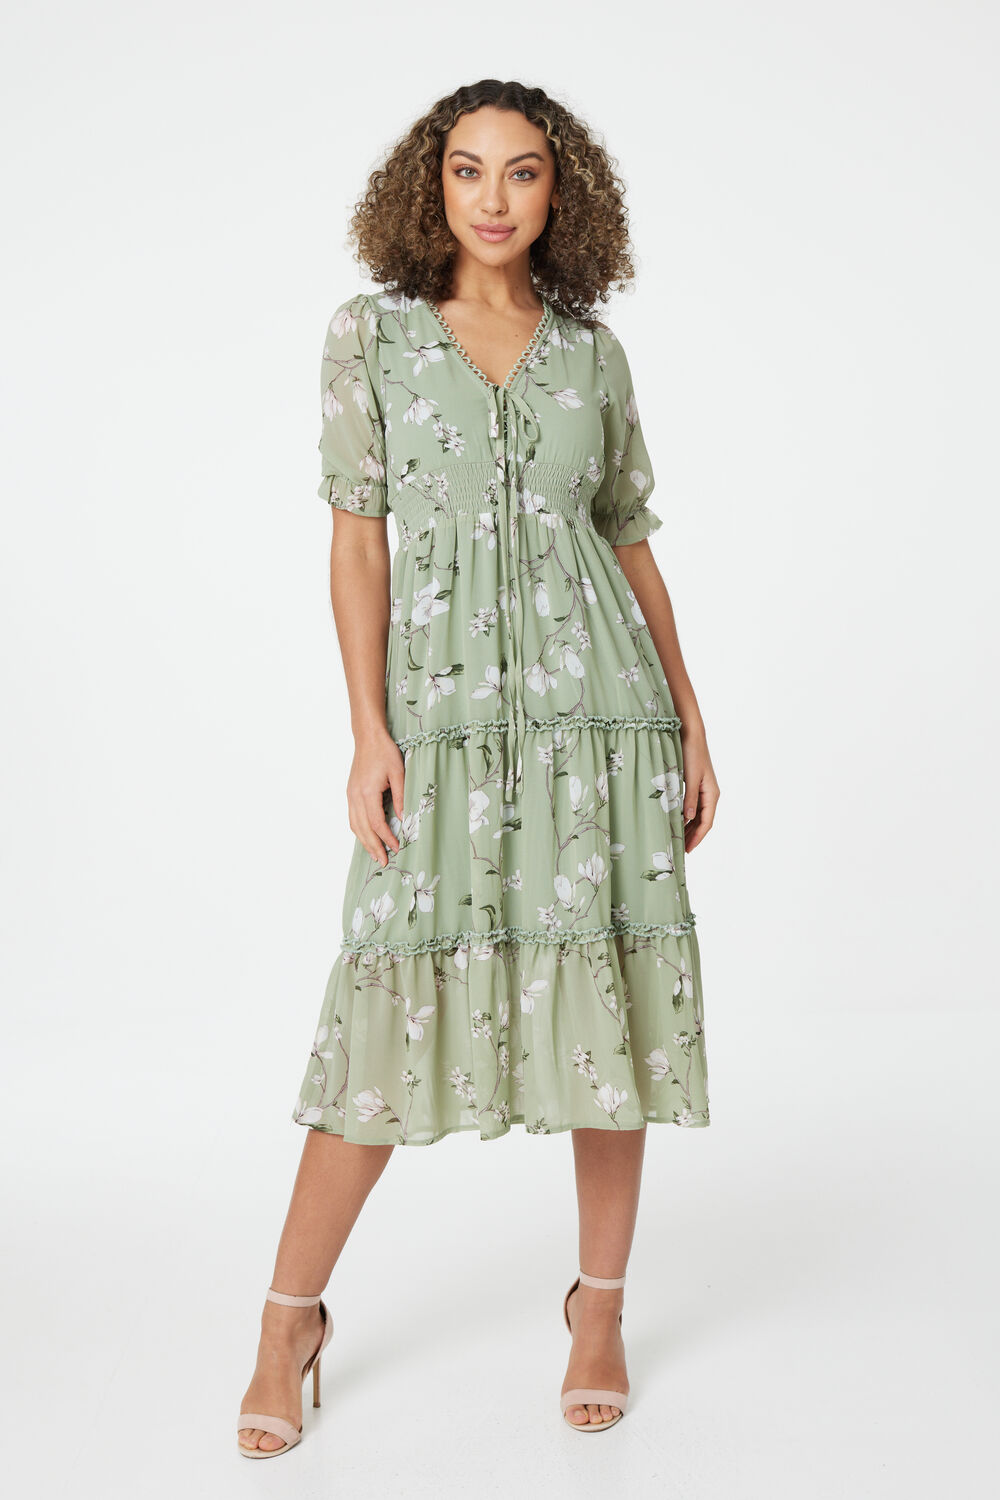 Izabel London Green - Floral Tie Front Midi Tea Dress, Size: 8